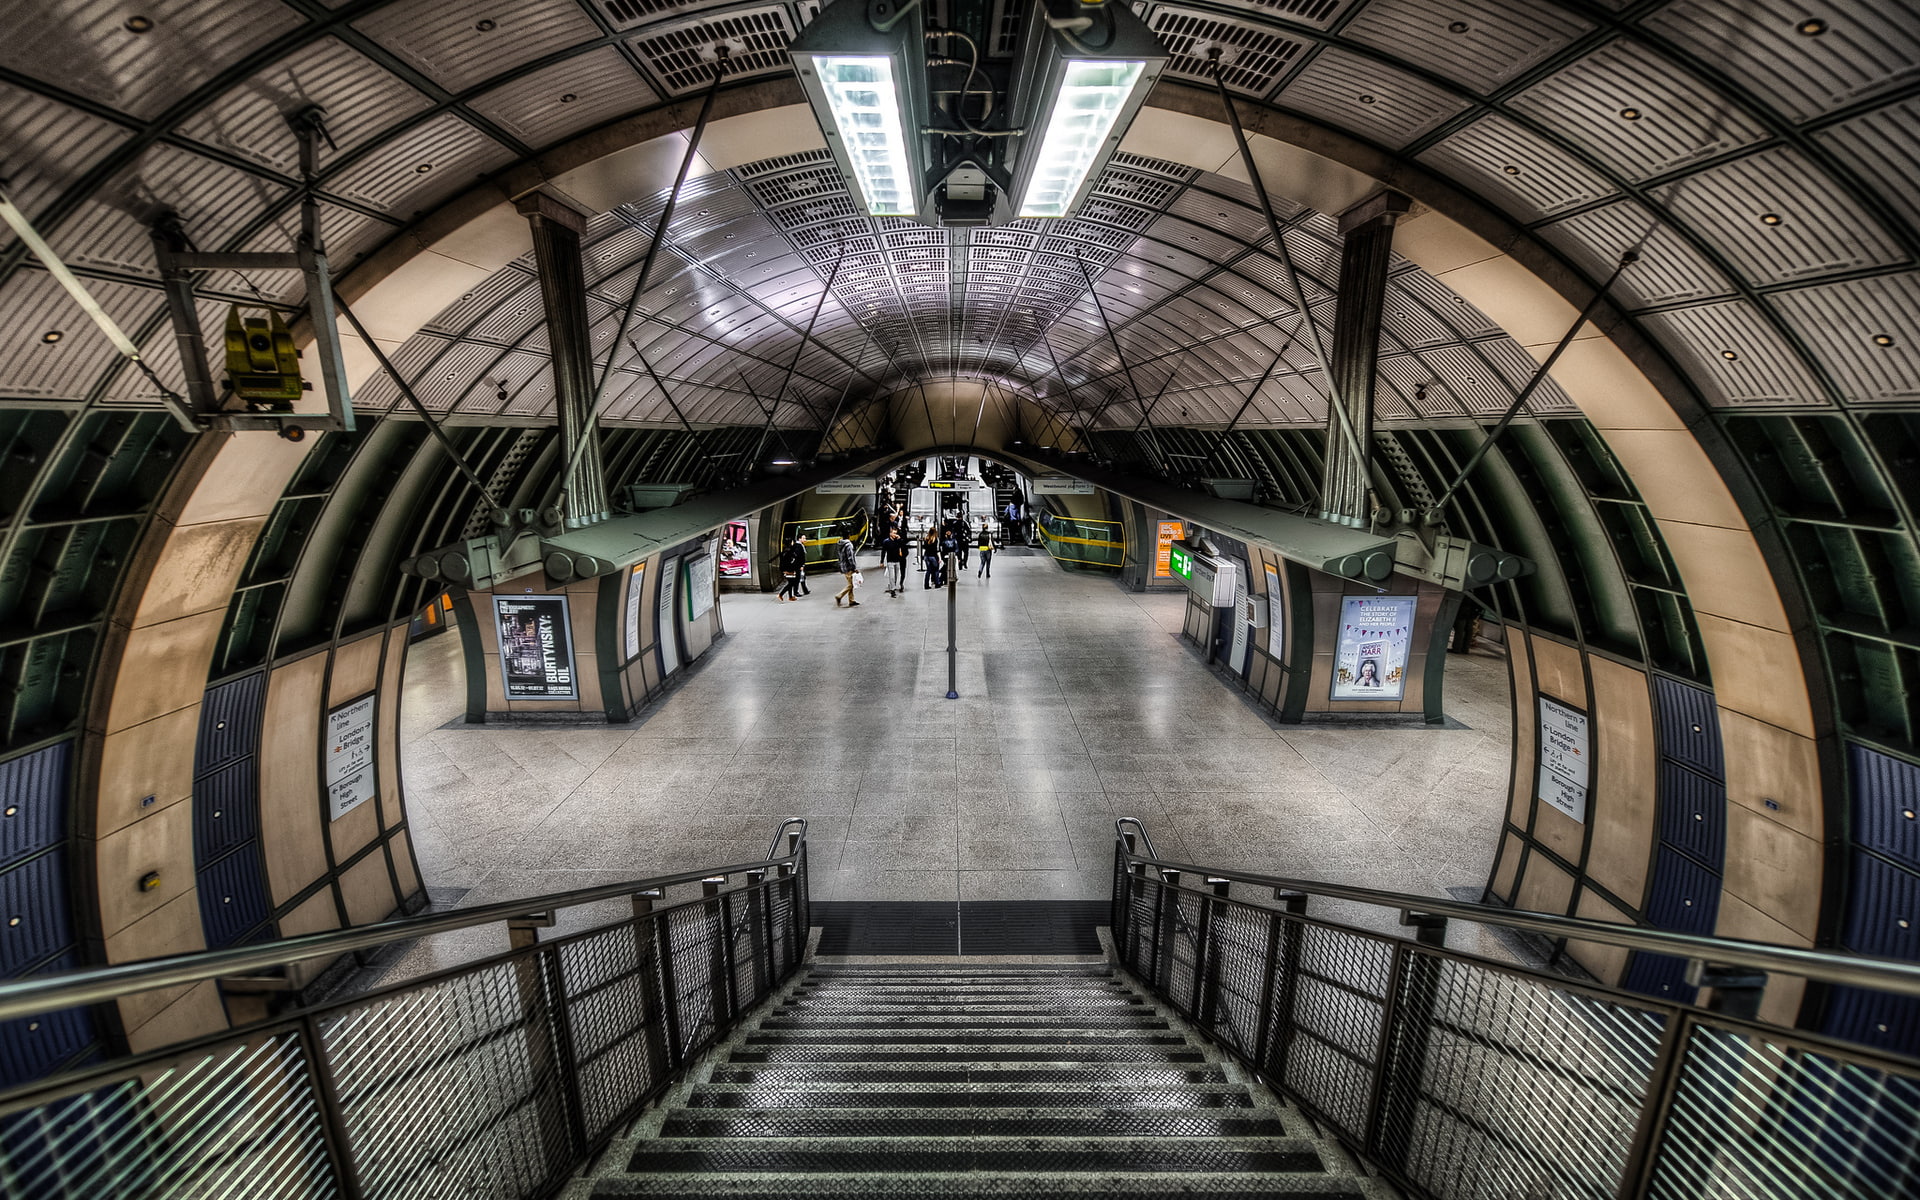 England, London, underground, train station, interior, photo manipulation